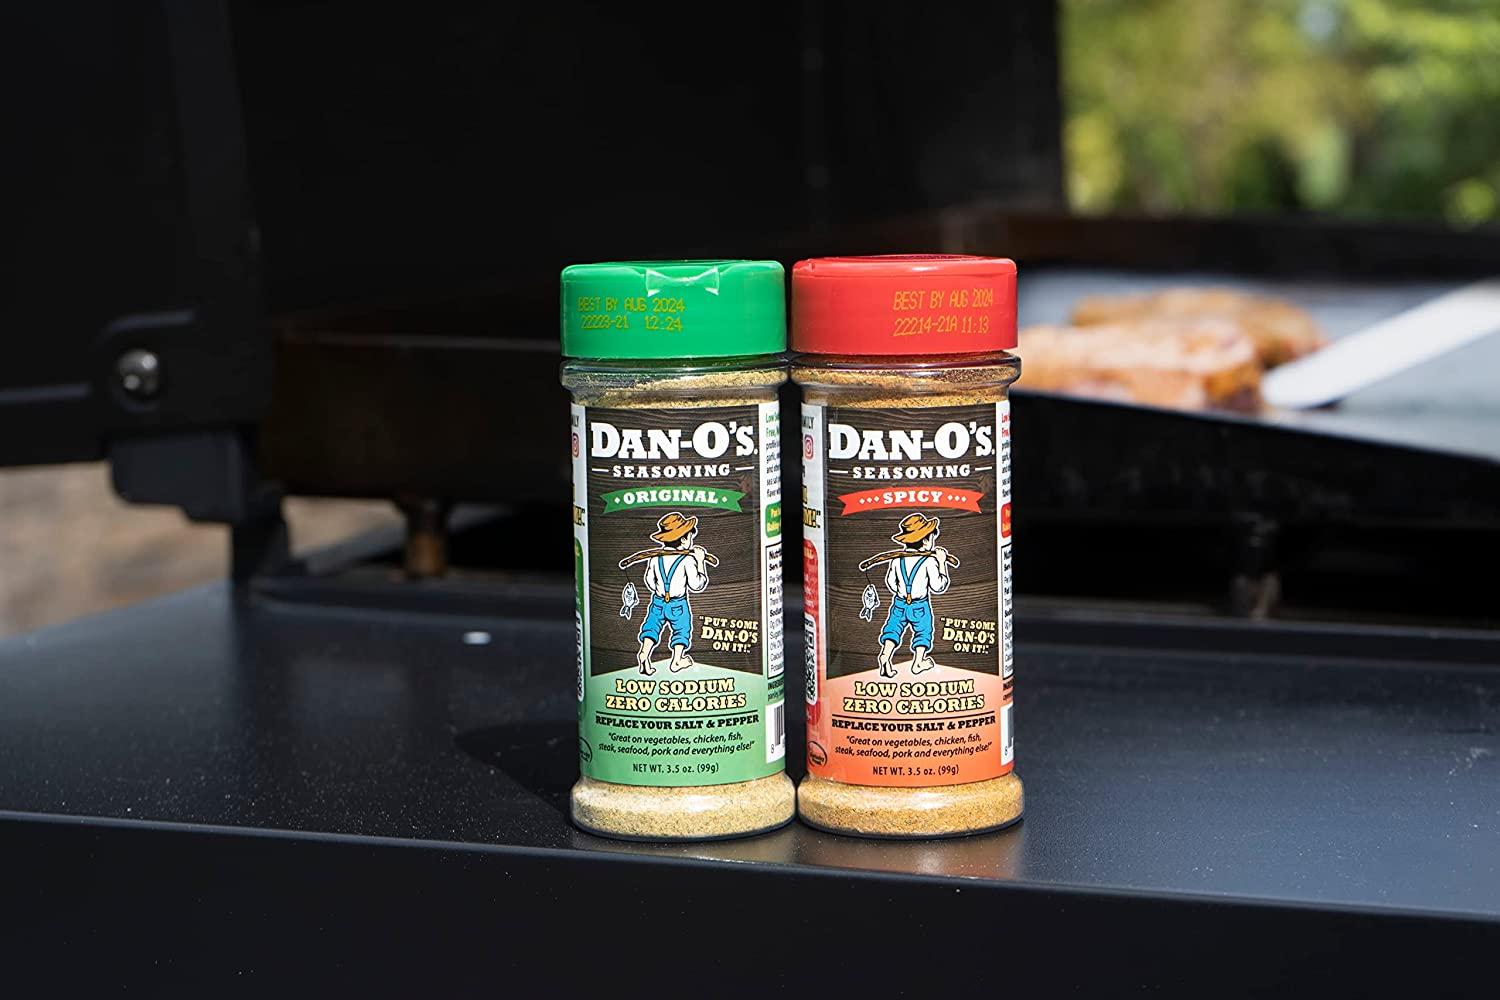 Dan-O's Seasoning Starter Pack - Original & Spicy Flavors